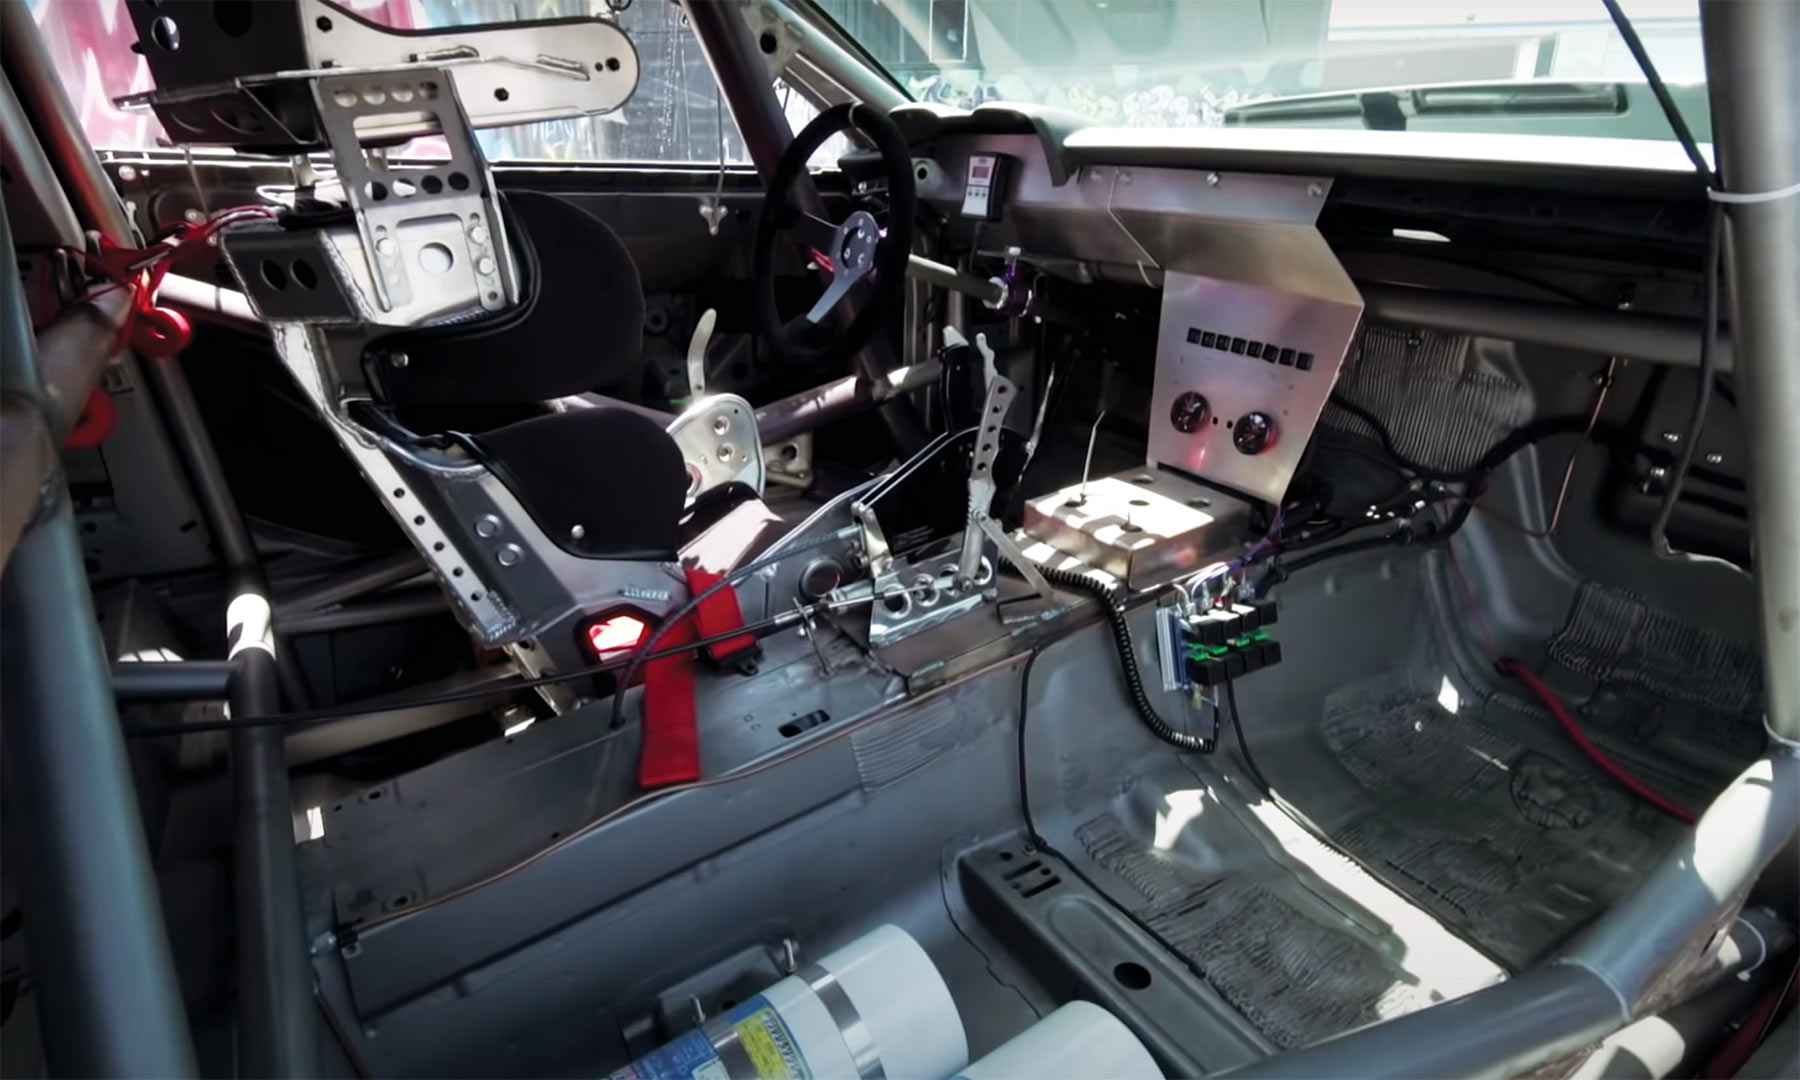 Stripped interior of Camaro